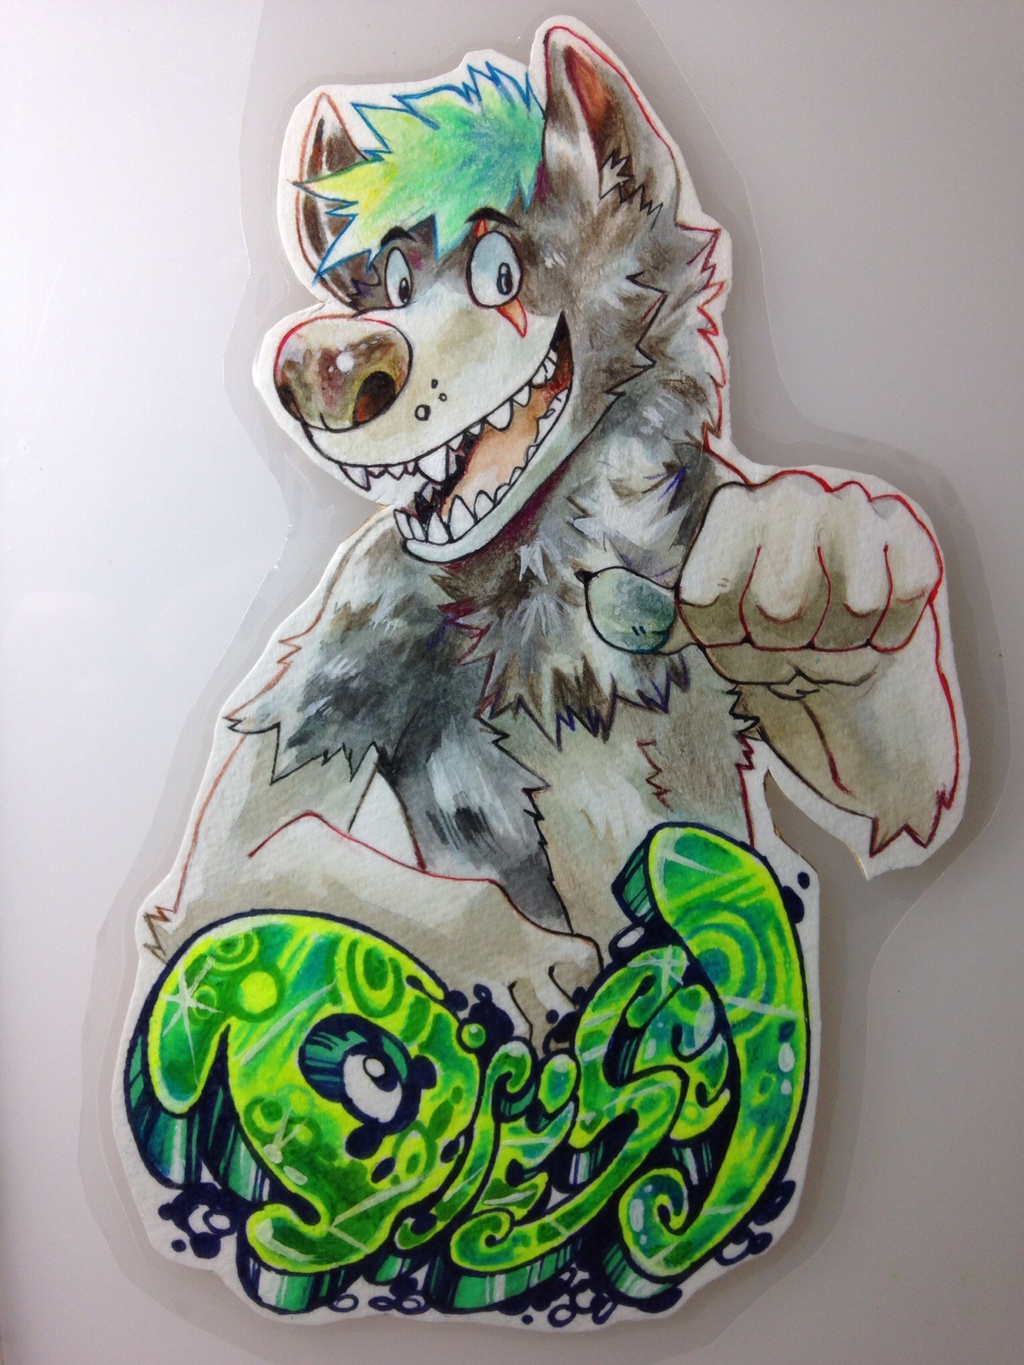 Traditional Graffiti badge-Diesel Wolf